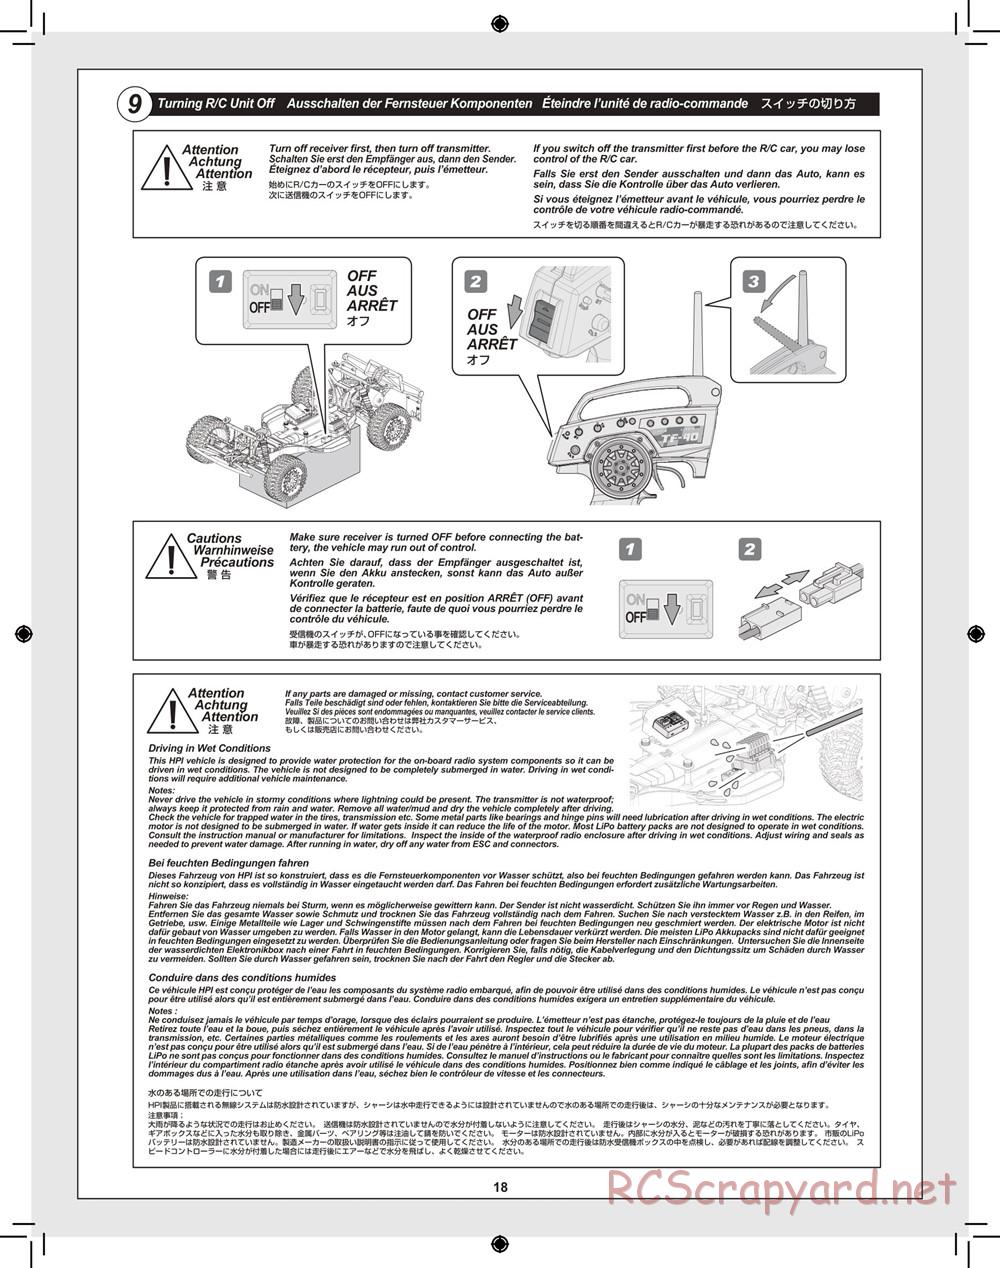 HPI - Blitz Waterproof - Manual - Page 18